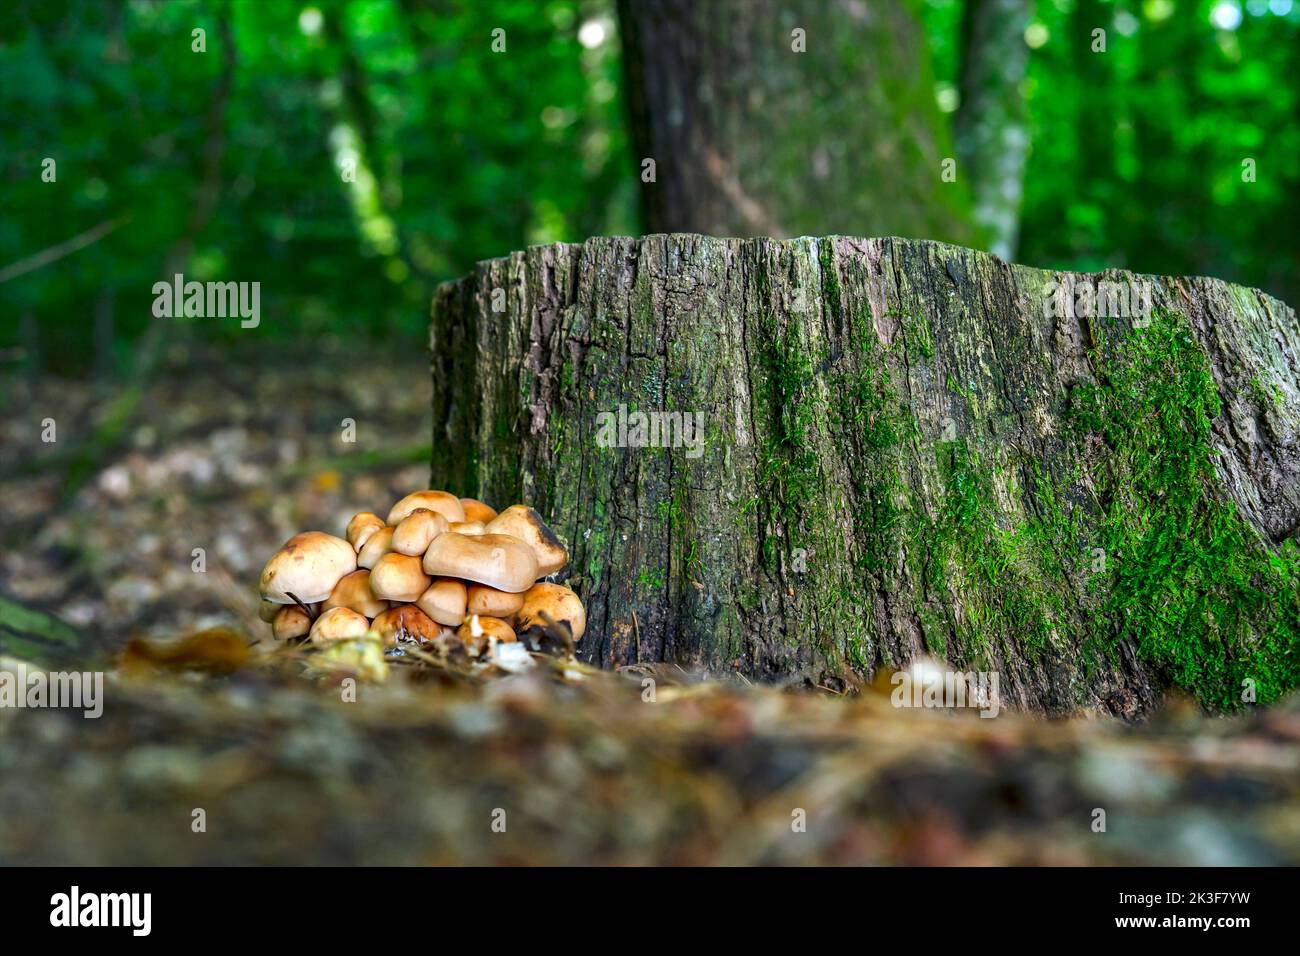 Kuehneromyces mutabilis mushrooms growing near a tree stump. Stock Photo